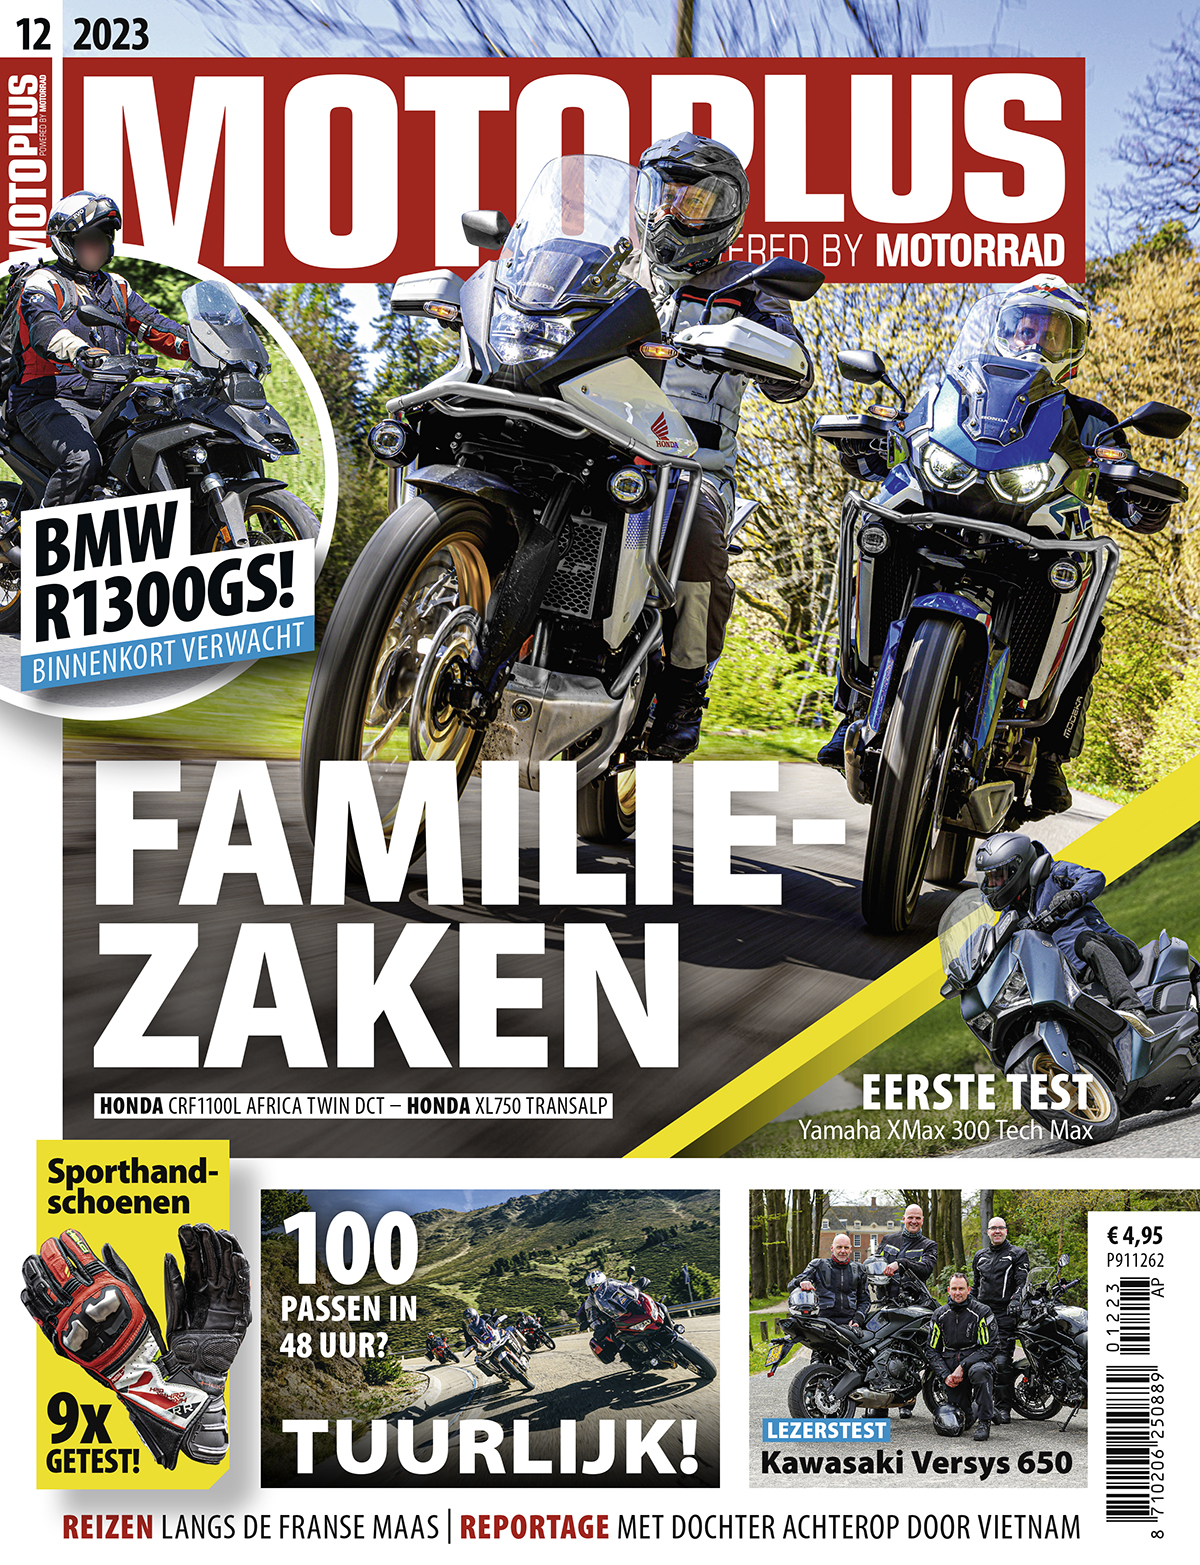 Moto Plus 12 |  Affaire de famille!  -MotoPlus